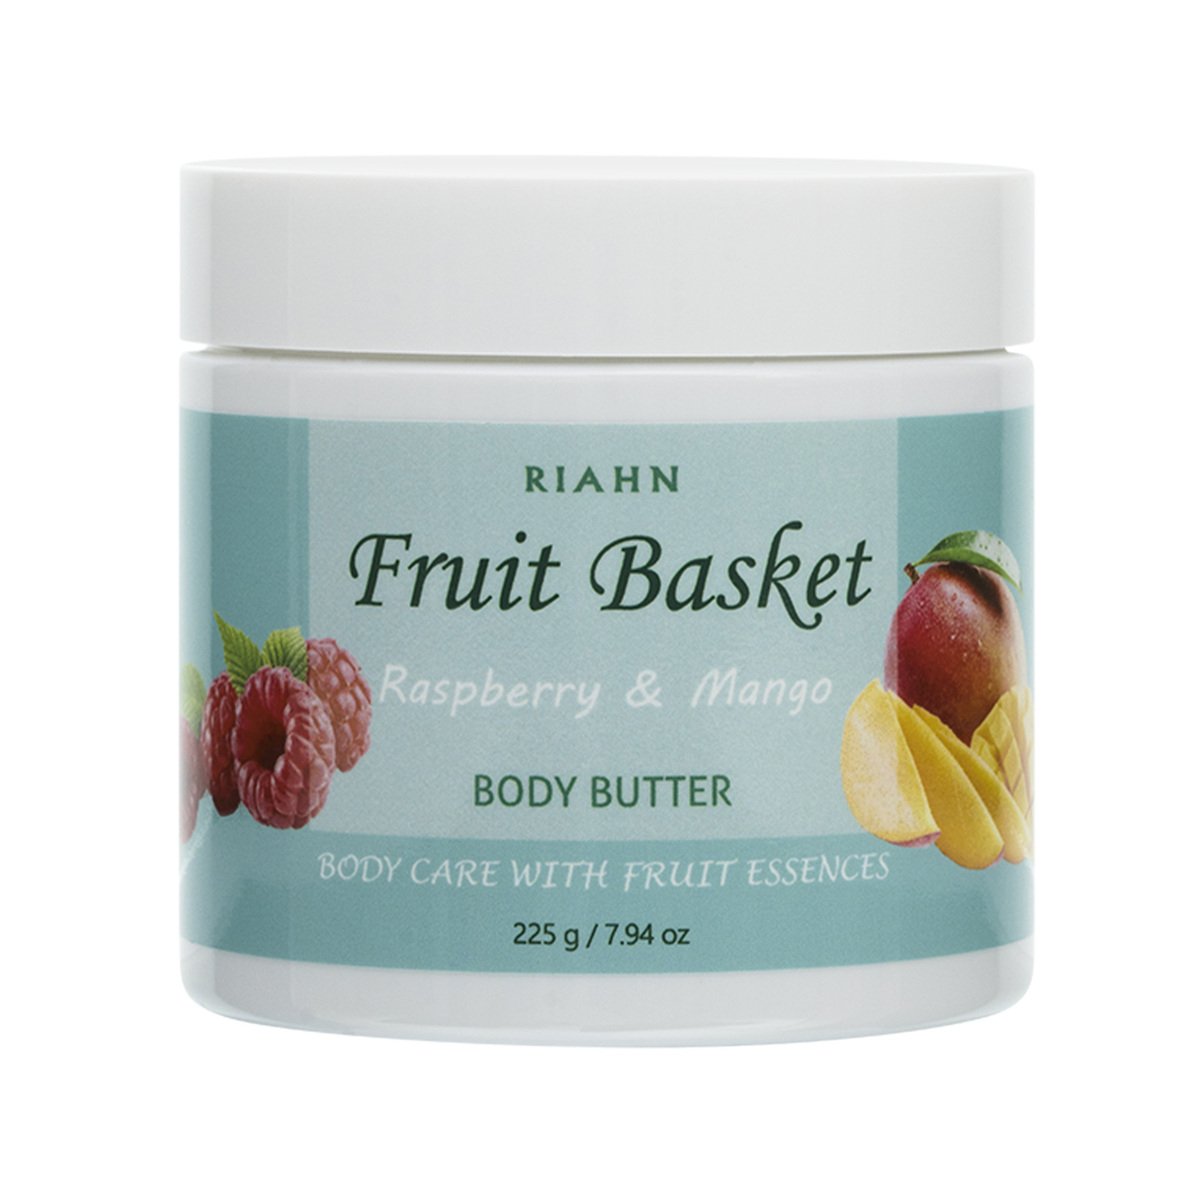 Riahn Fruit Basket Raspberry & Mango Body Butter Jar 225g